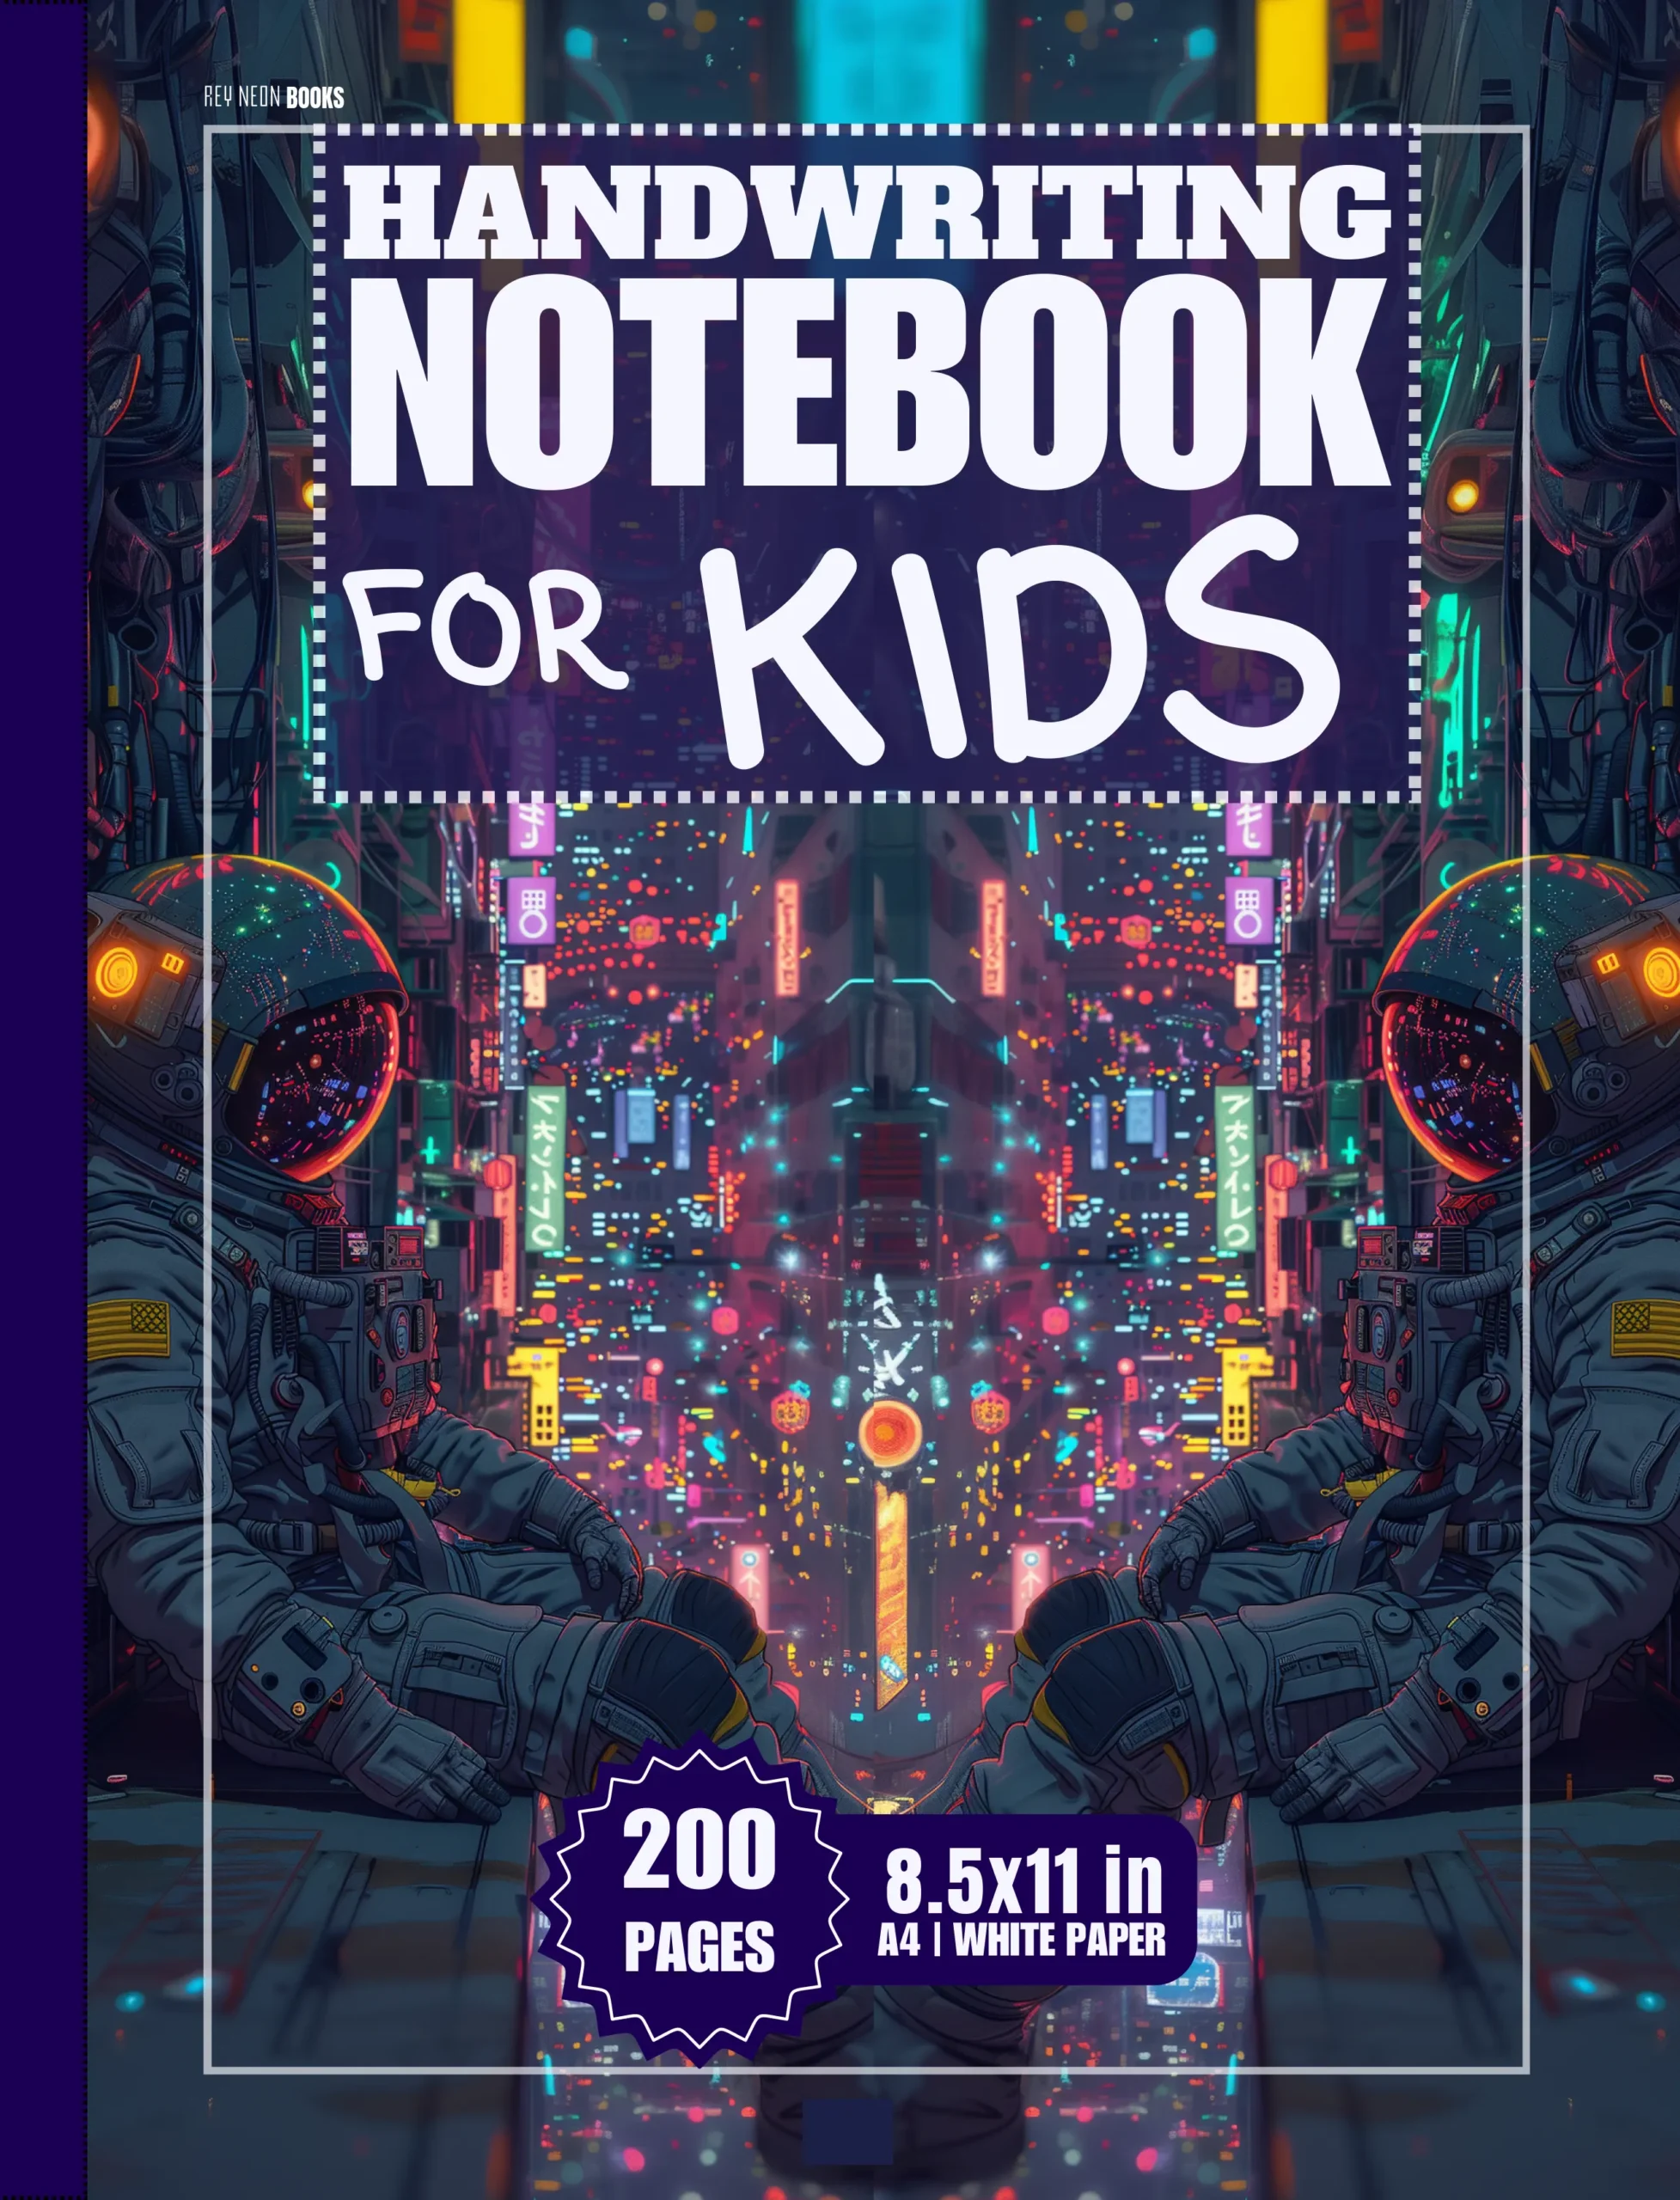 Handwriting Notebook for kids